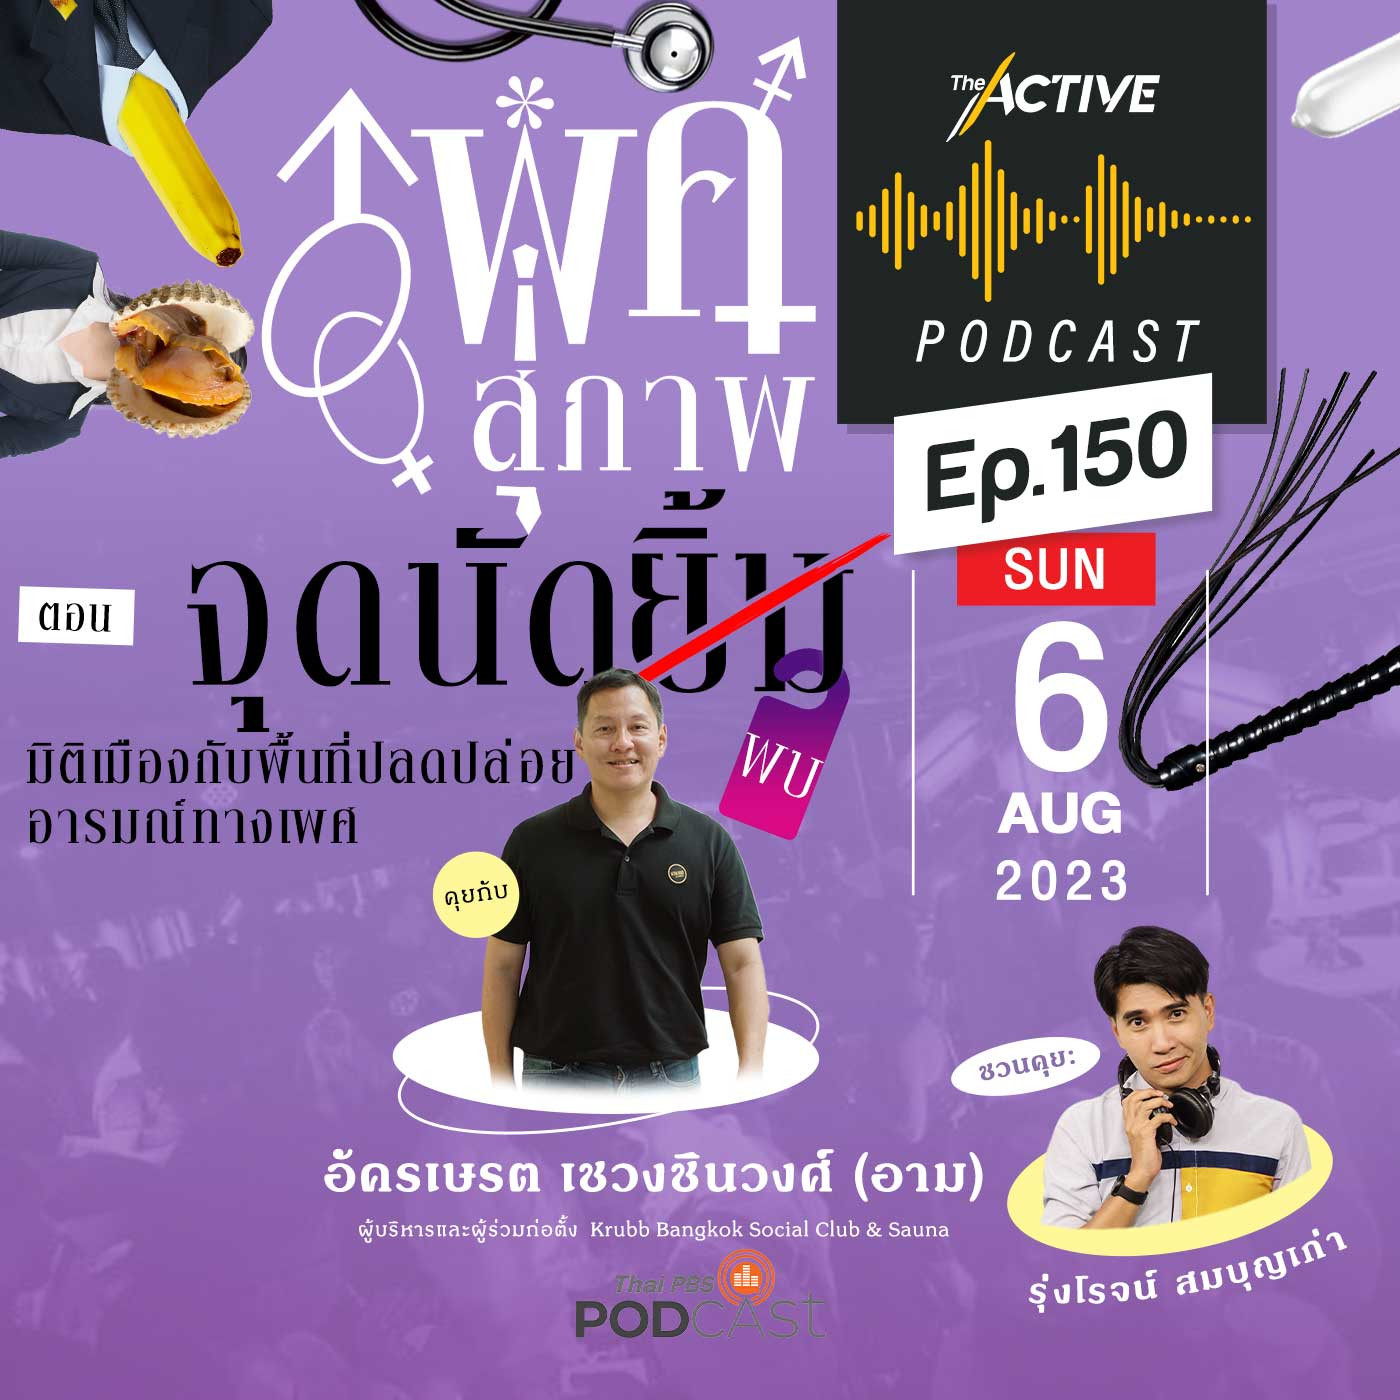 The Active Podcast EP. 150: จุดนัด (ยิ้ม) พบ มิติเมืองกับพื้นที่ปลดปล่อยอารมณ์ทางเพศ